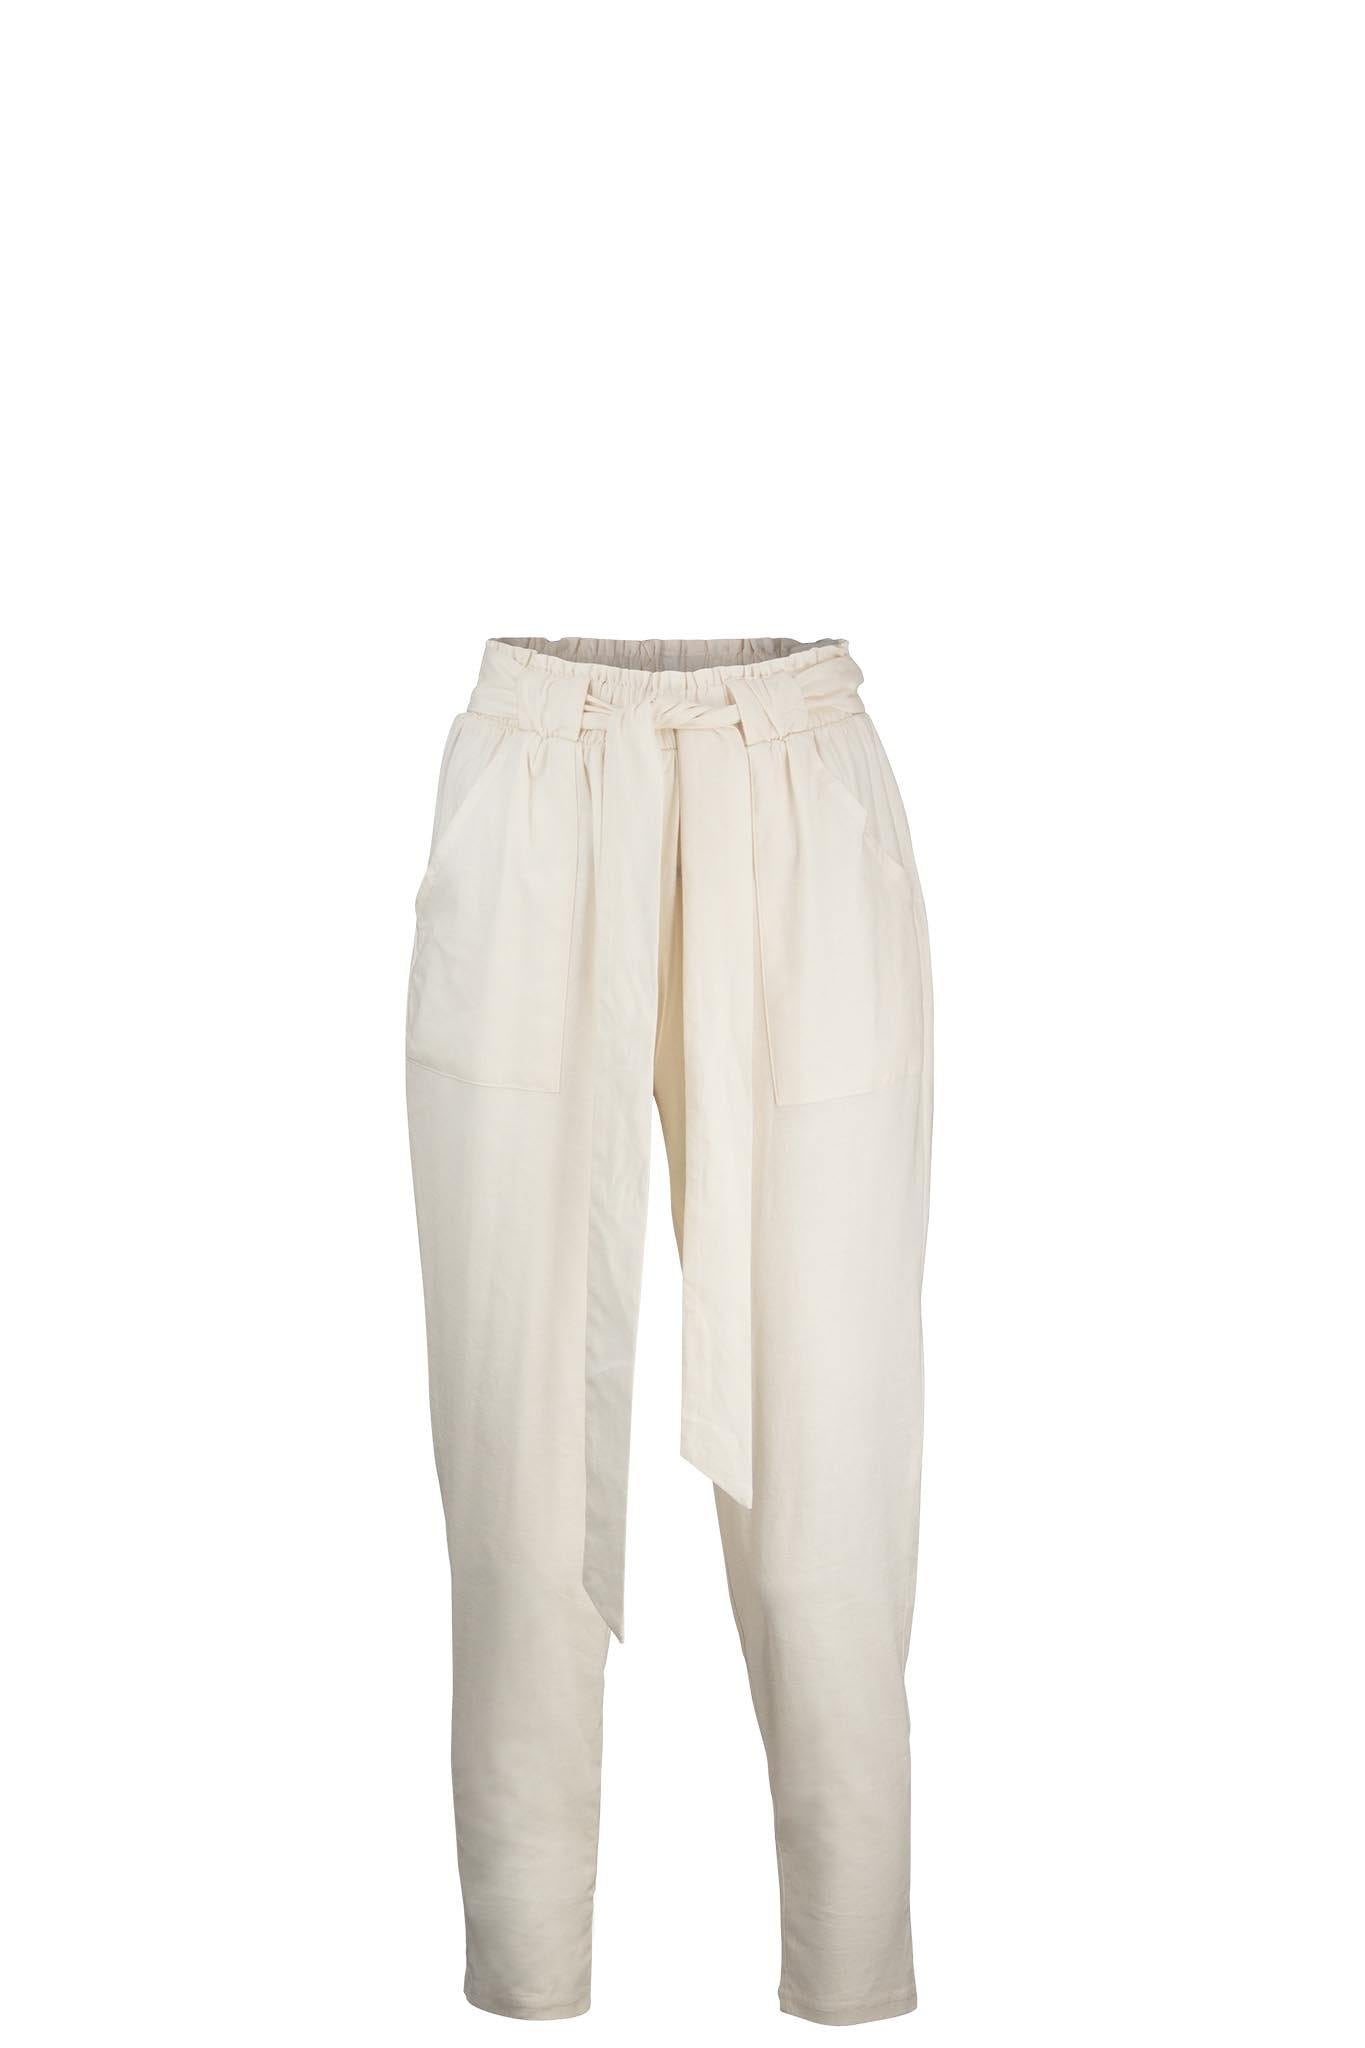 Nevada Ivory Linen Blend Slim Ladies Pants - stok.